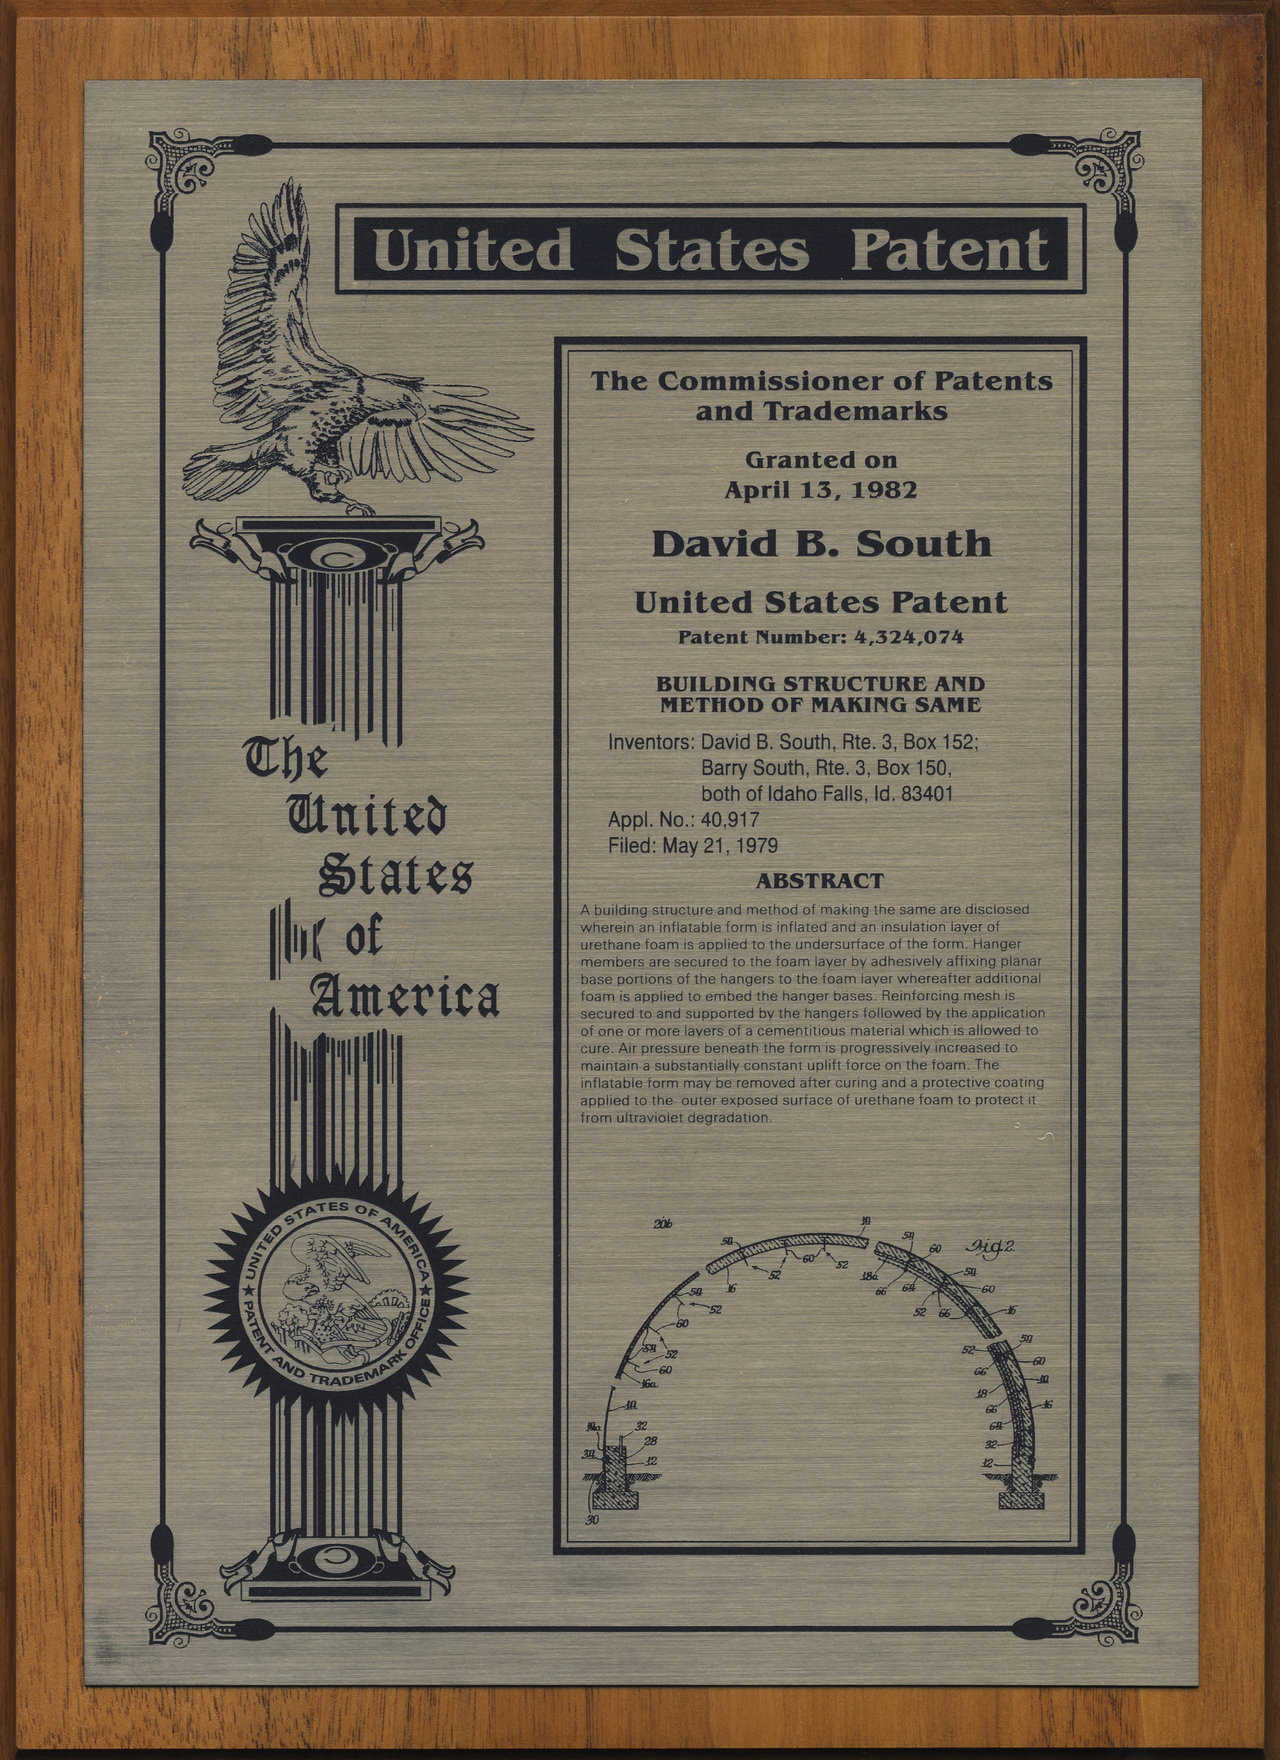 U.S. Patent #4,324,074